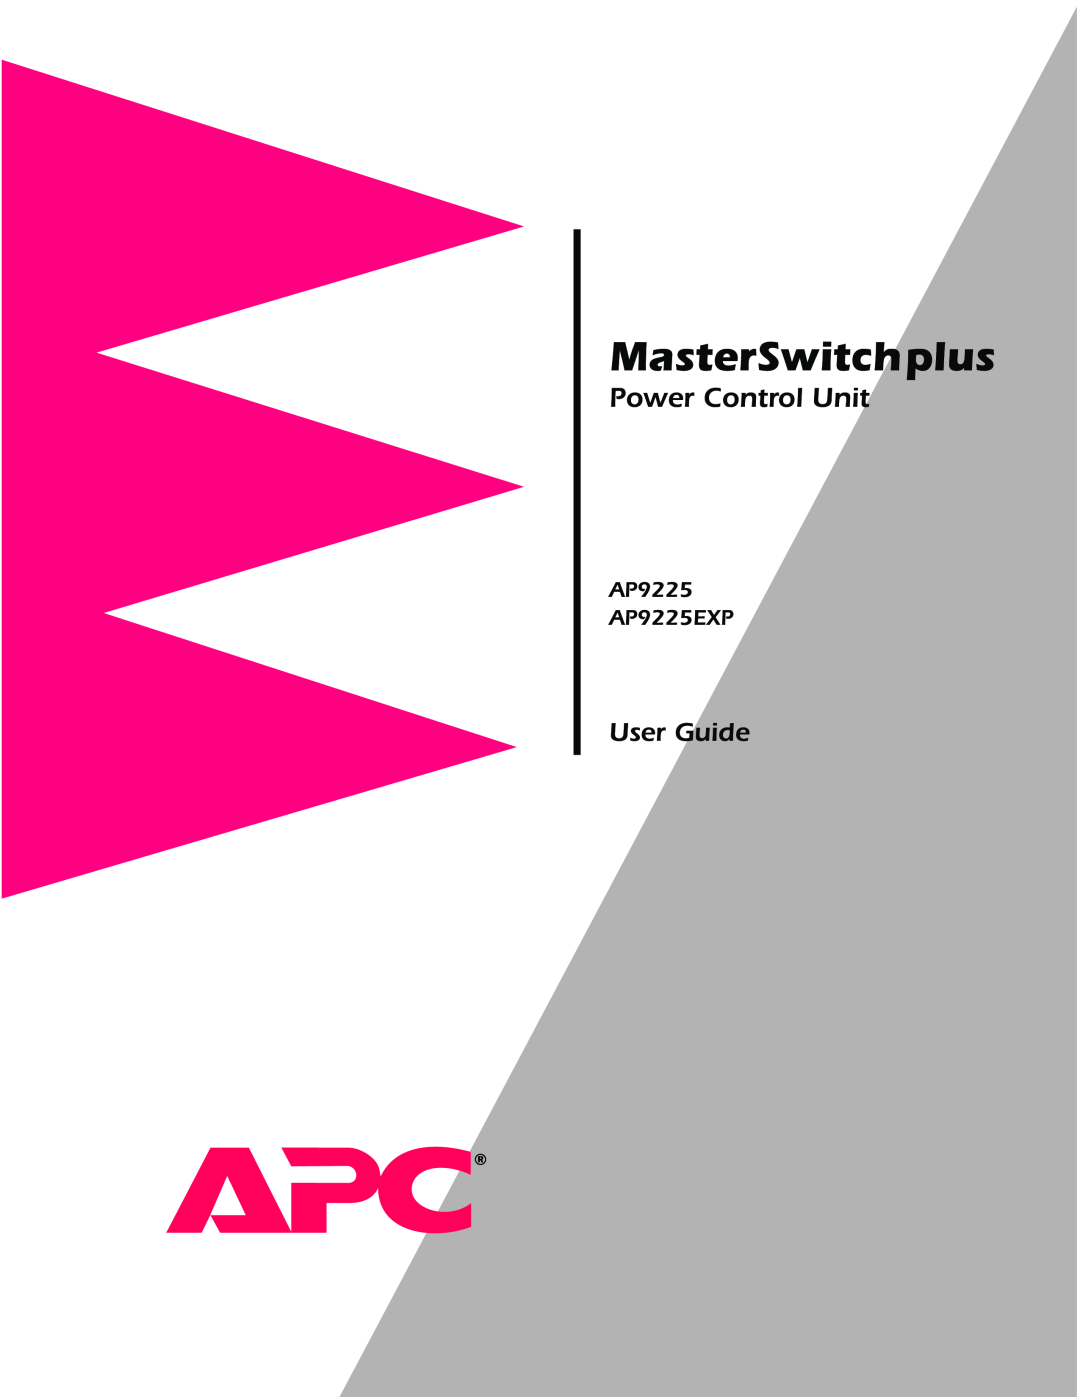 APC manual MasterSwitchplus, Power Control Unit, User Guide, AP9225 AP9225EXP 